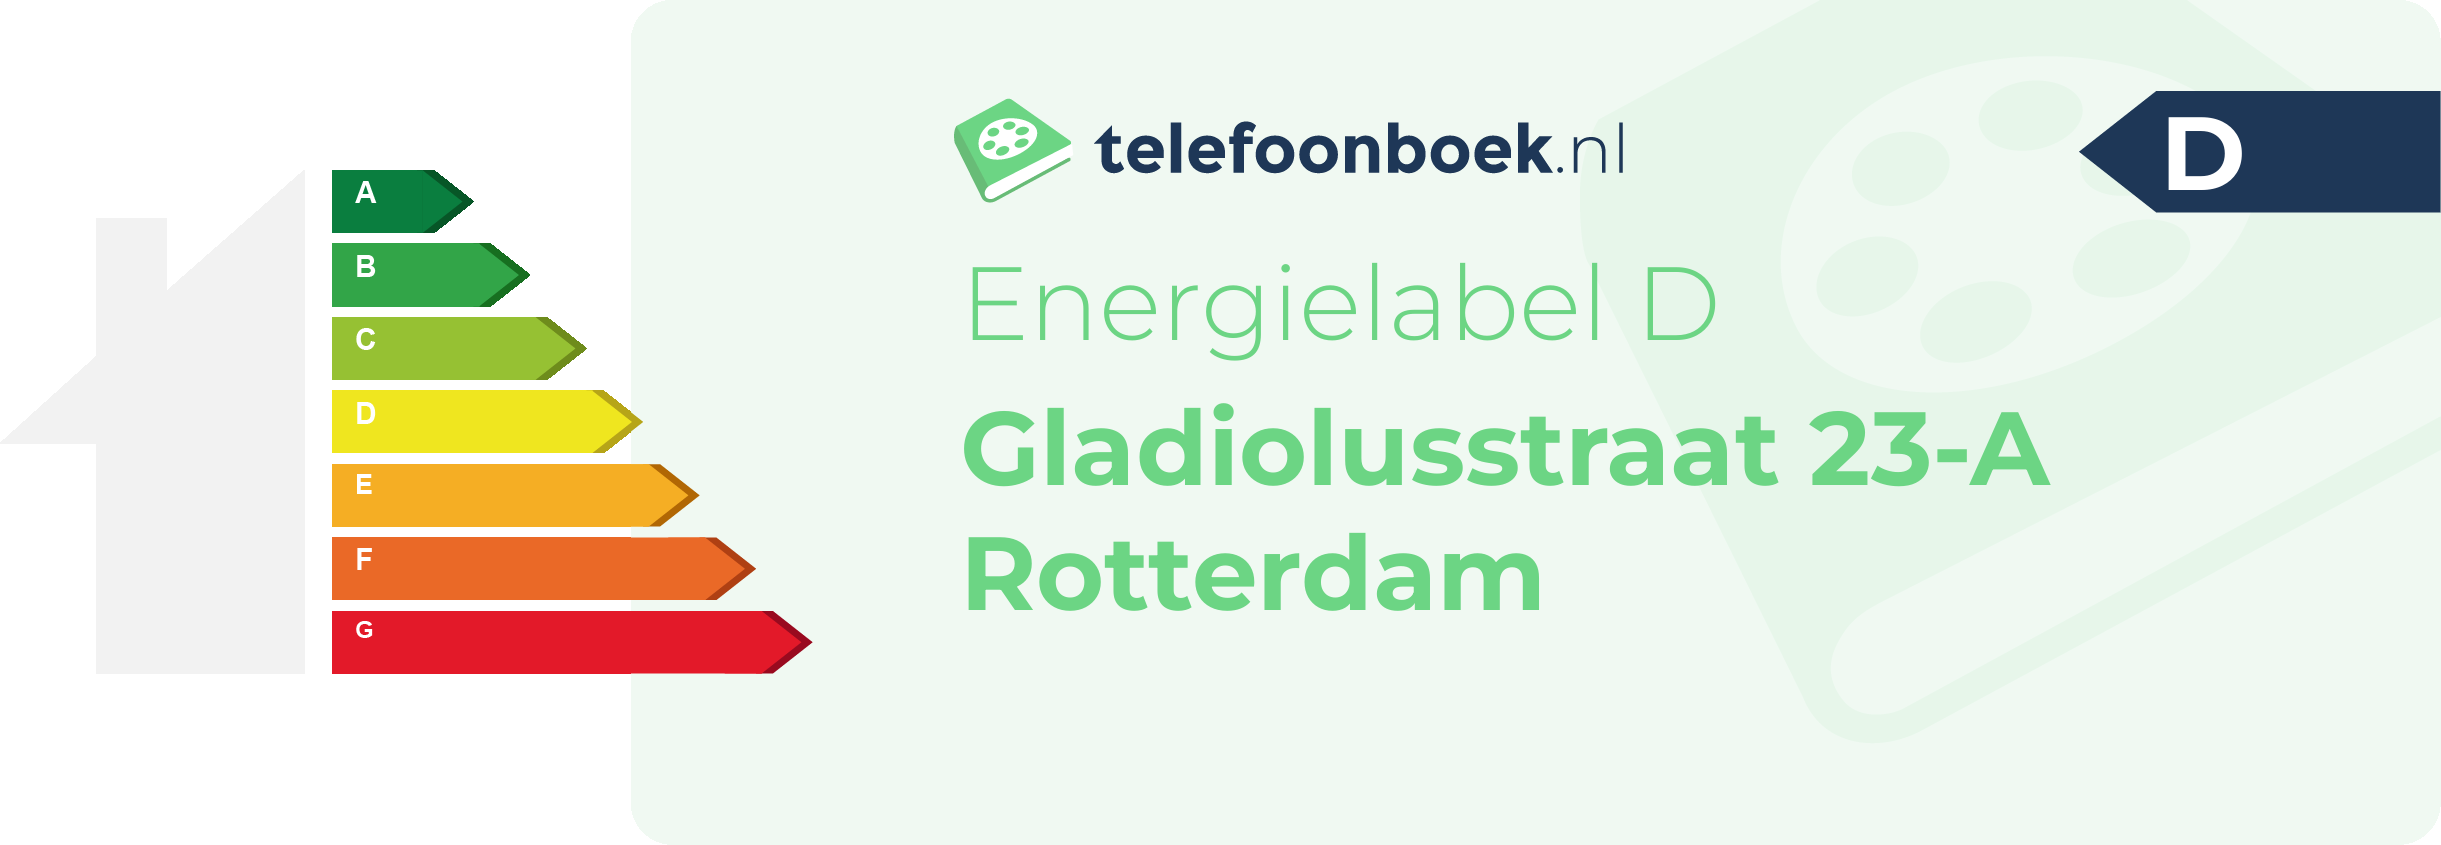 Energielabel Gladiolusstraat 23-A Rotterdam